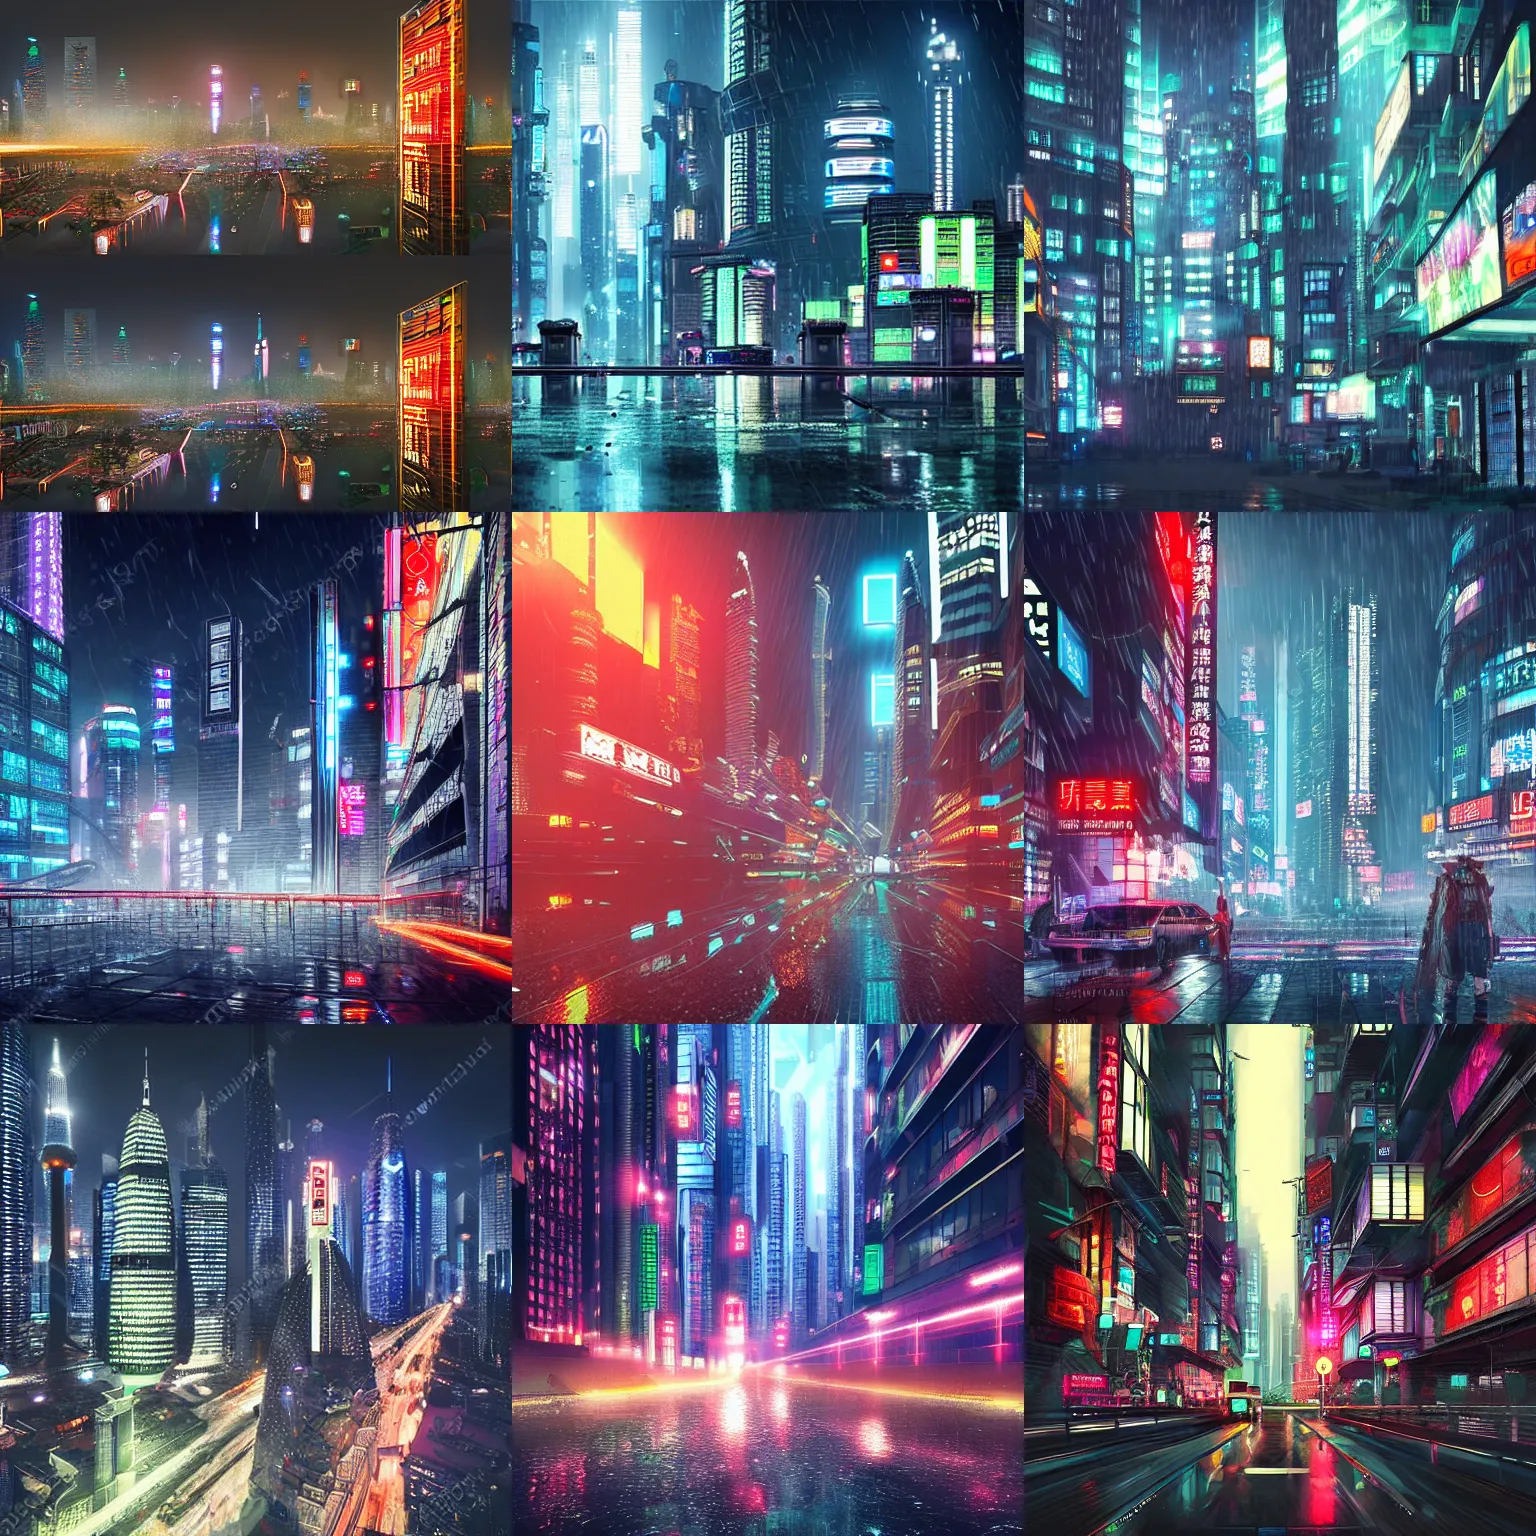 Prompt: cyberpunk city in Shanghai, rain, night, photorealistic